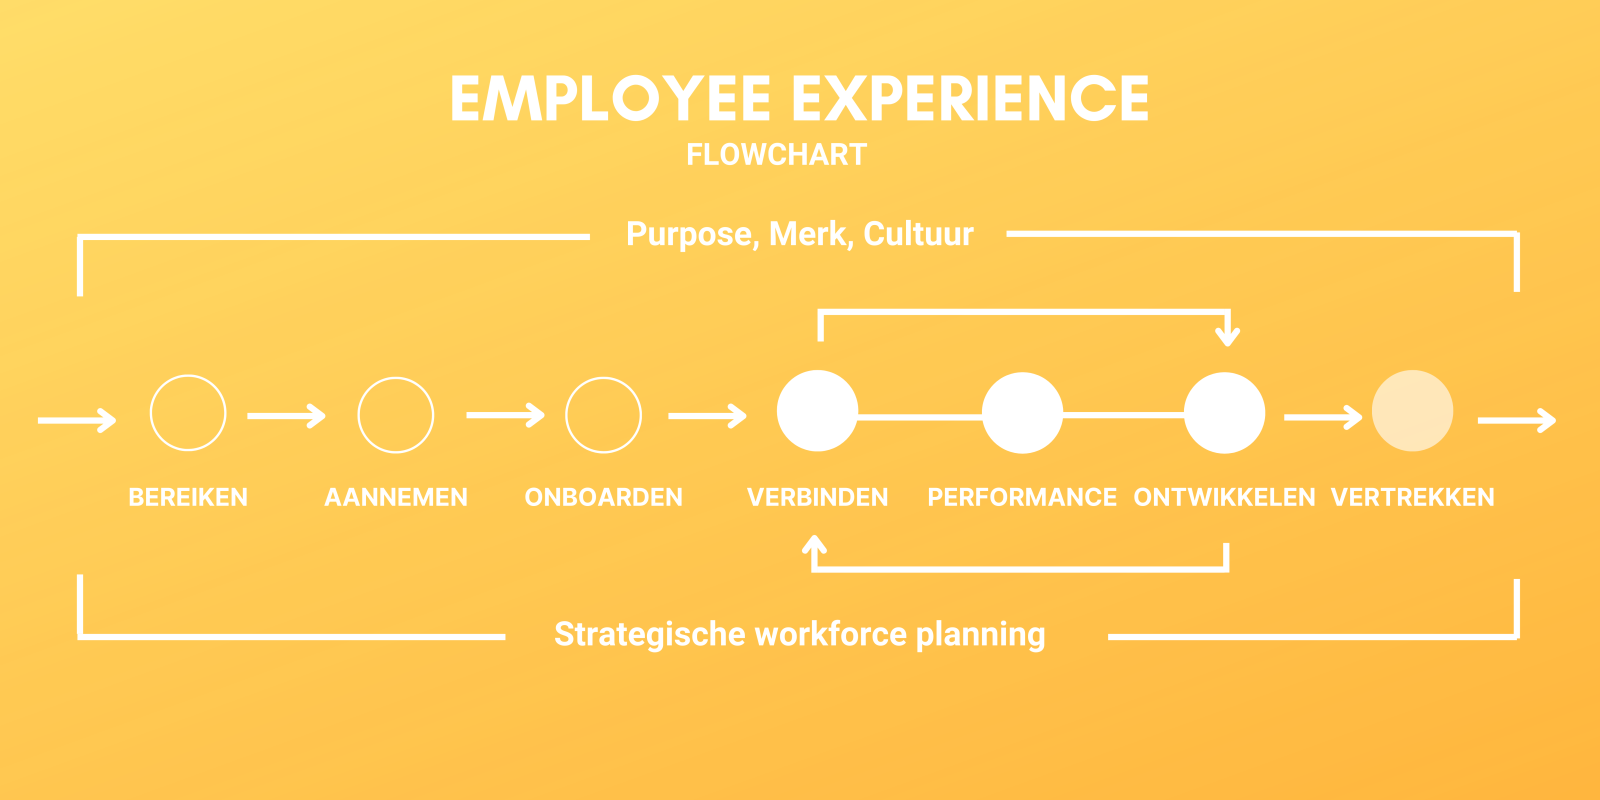 Employee experience flowchart